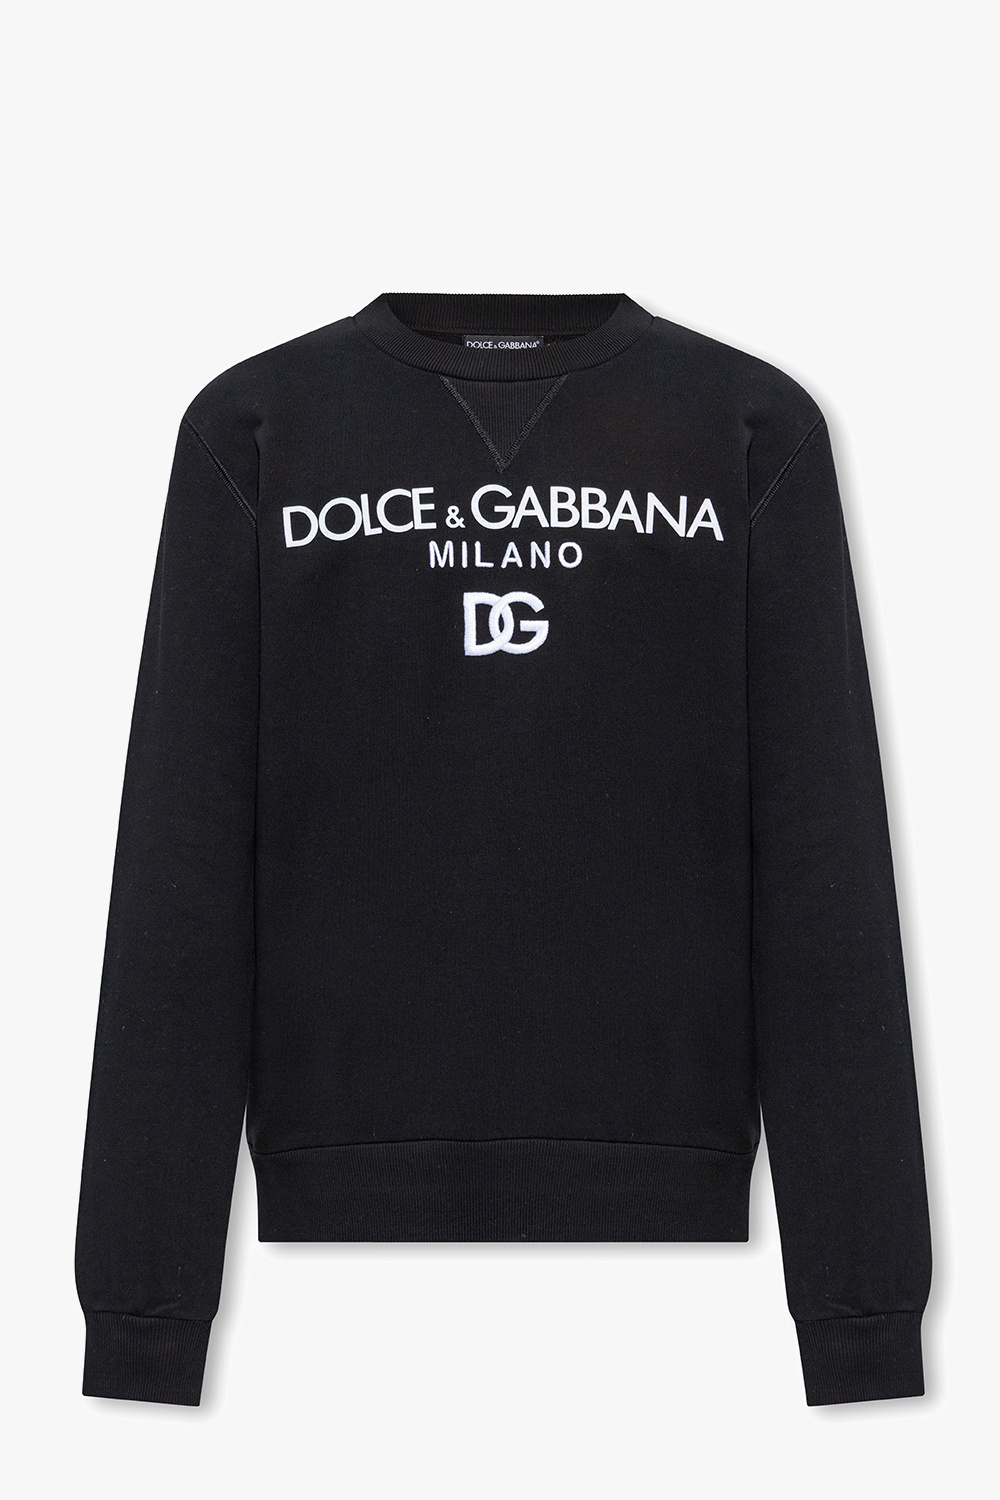 Dolce & Gabbana Sweatshirt with logo | Men's Clothing | Vitkac